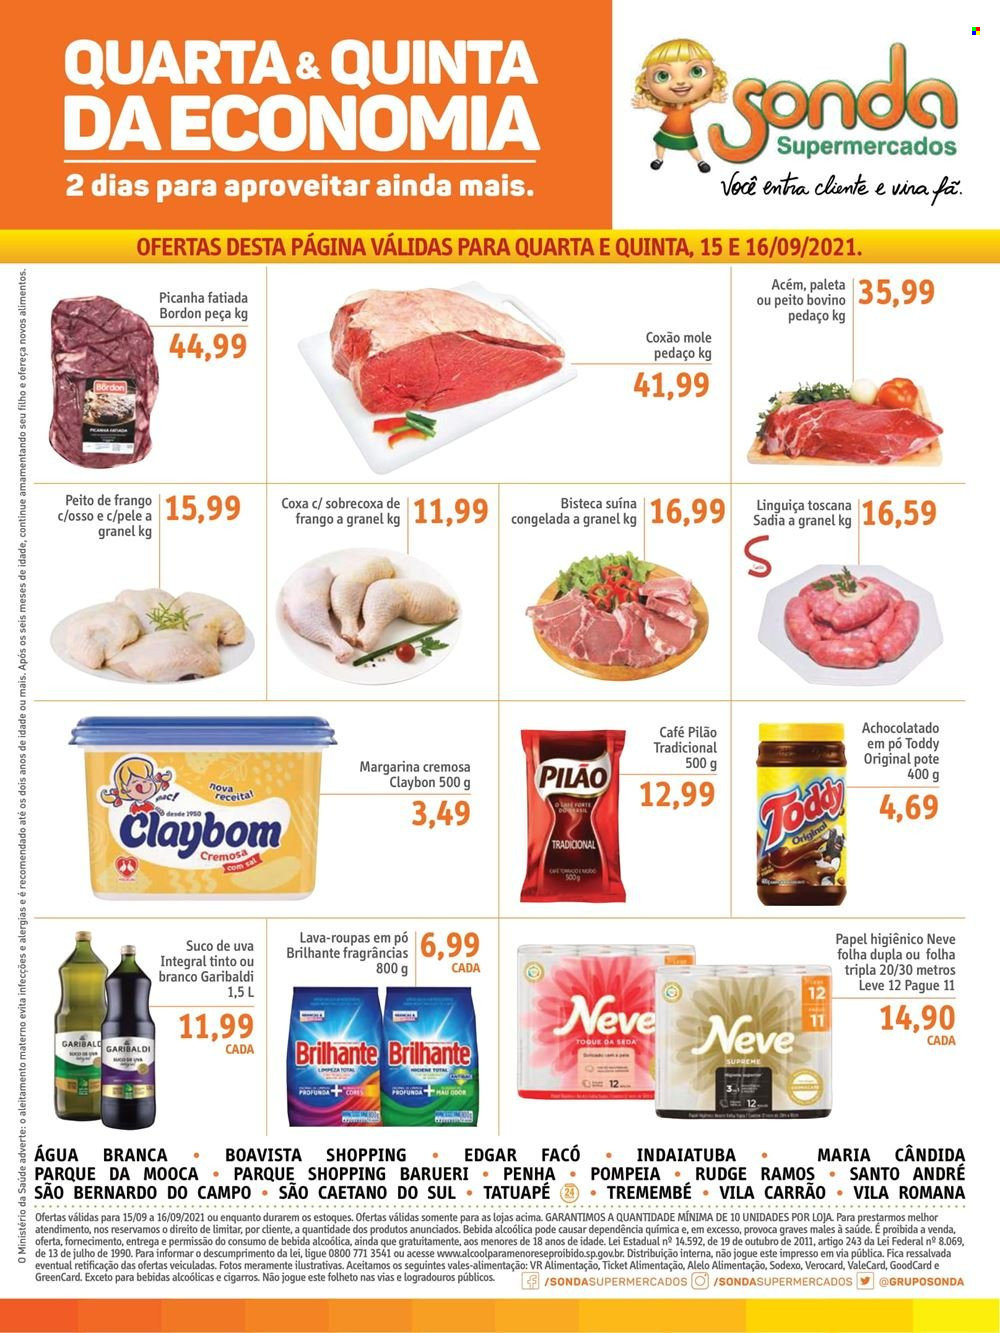 Encarte Sonda Supermercados  - 15.09.2021 - 16.09.2021.